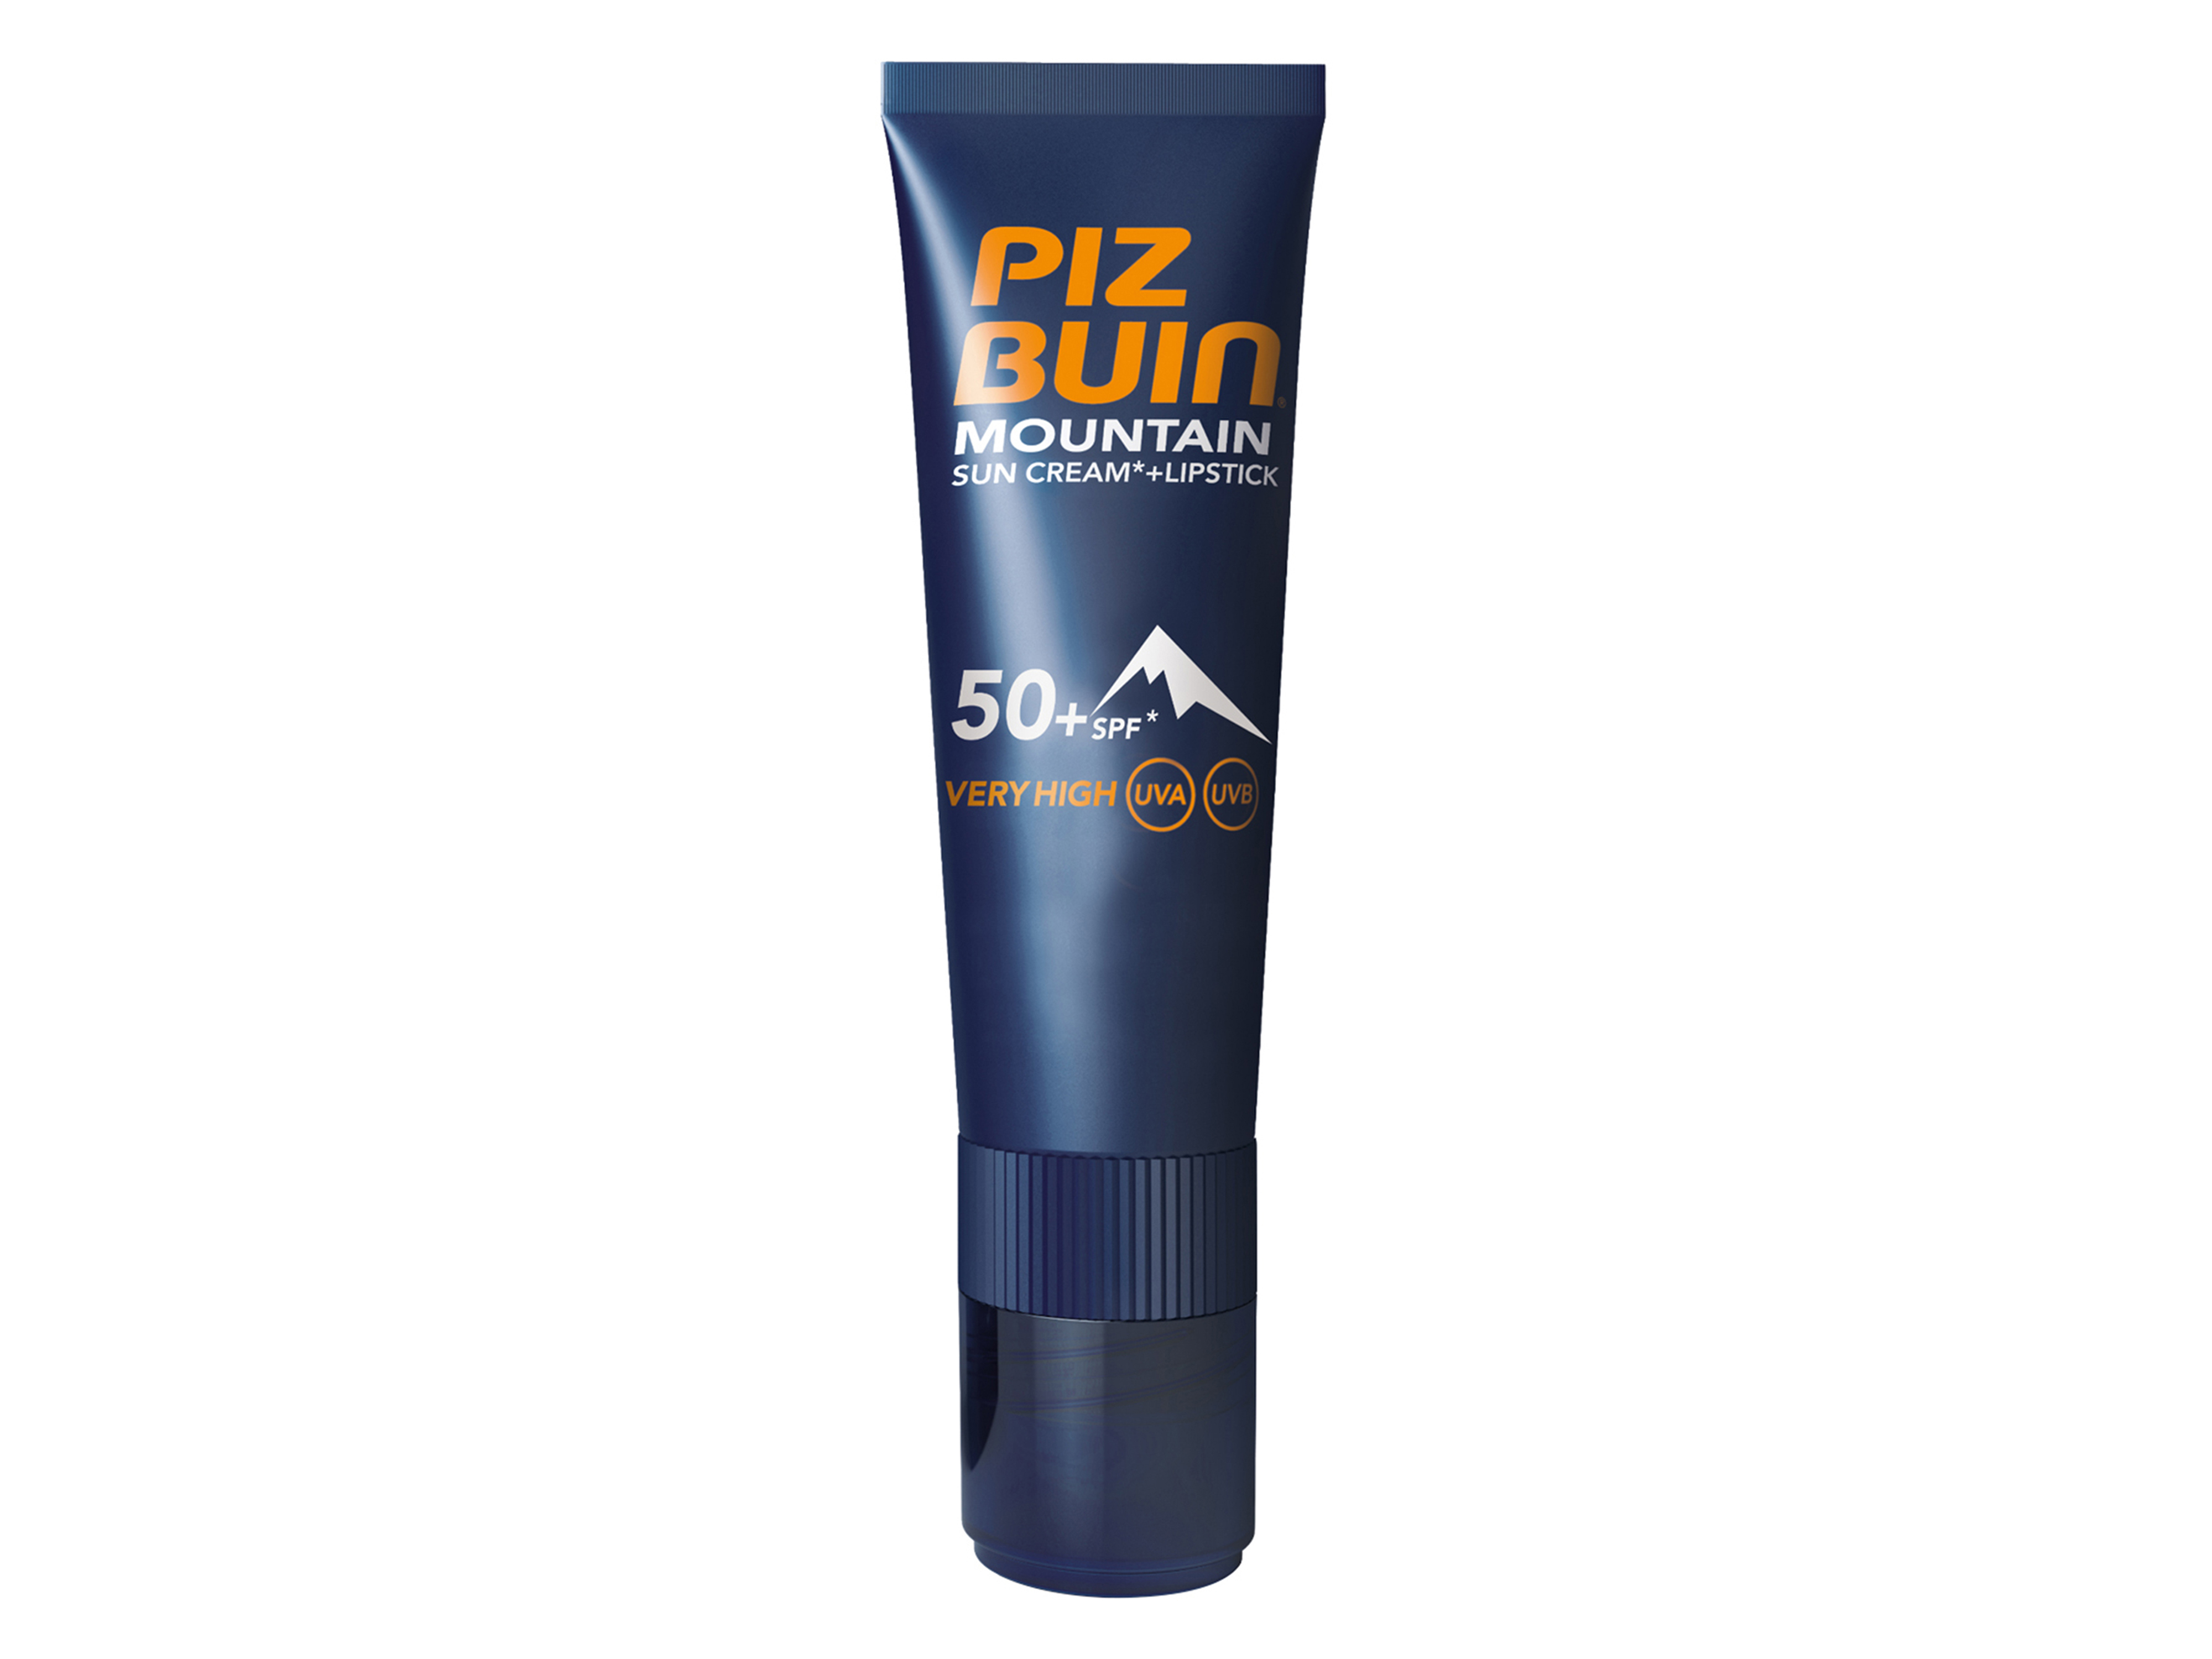 Piz Buin Mountain Sun Cream & Lipstick, SPF 50+, 20 ml